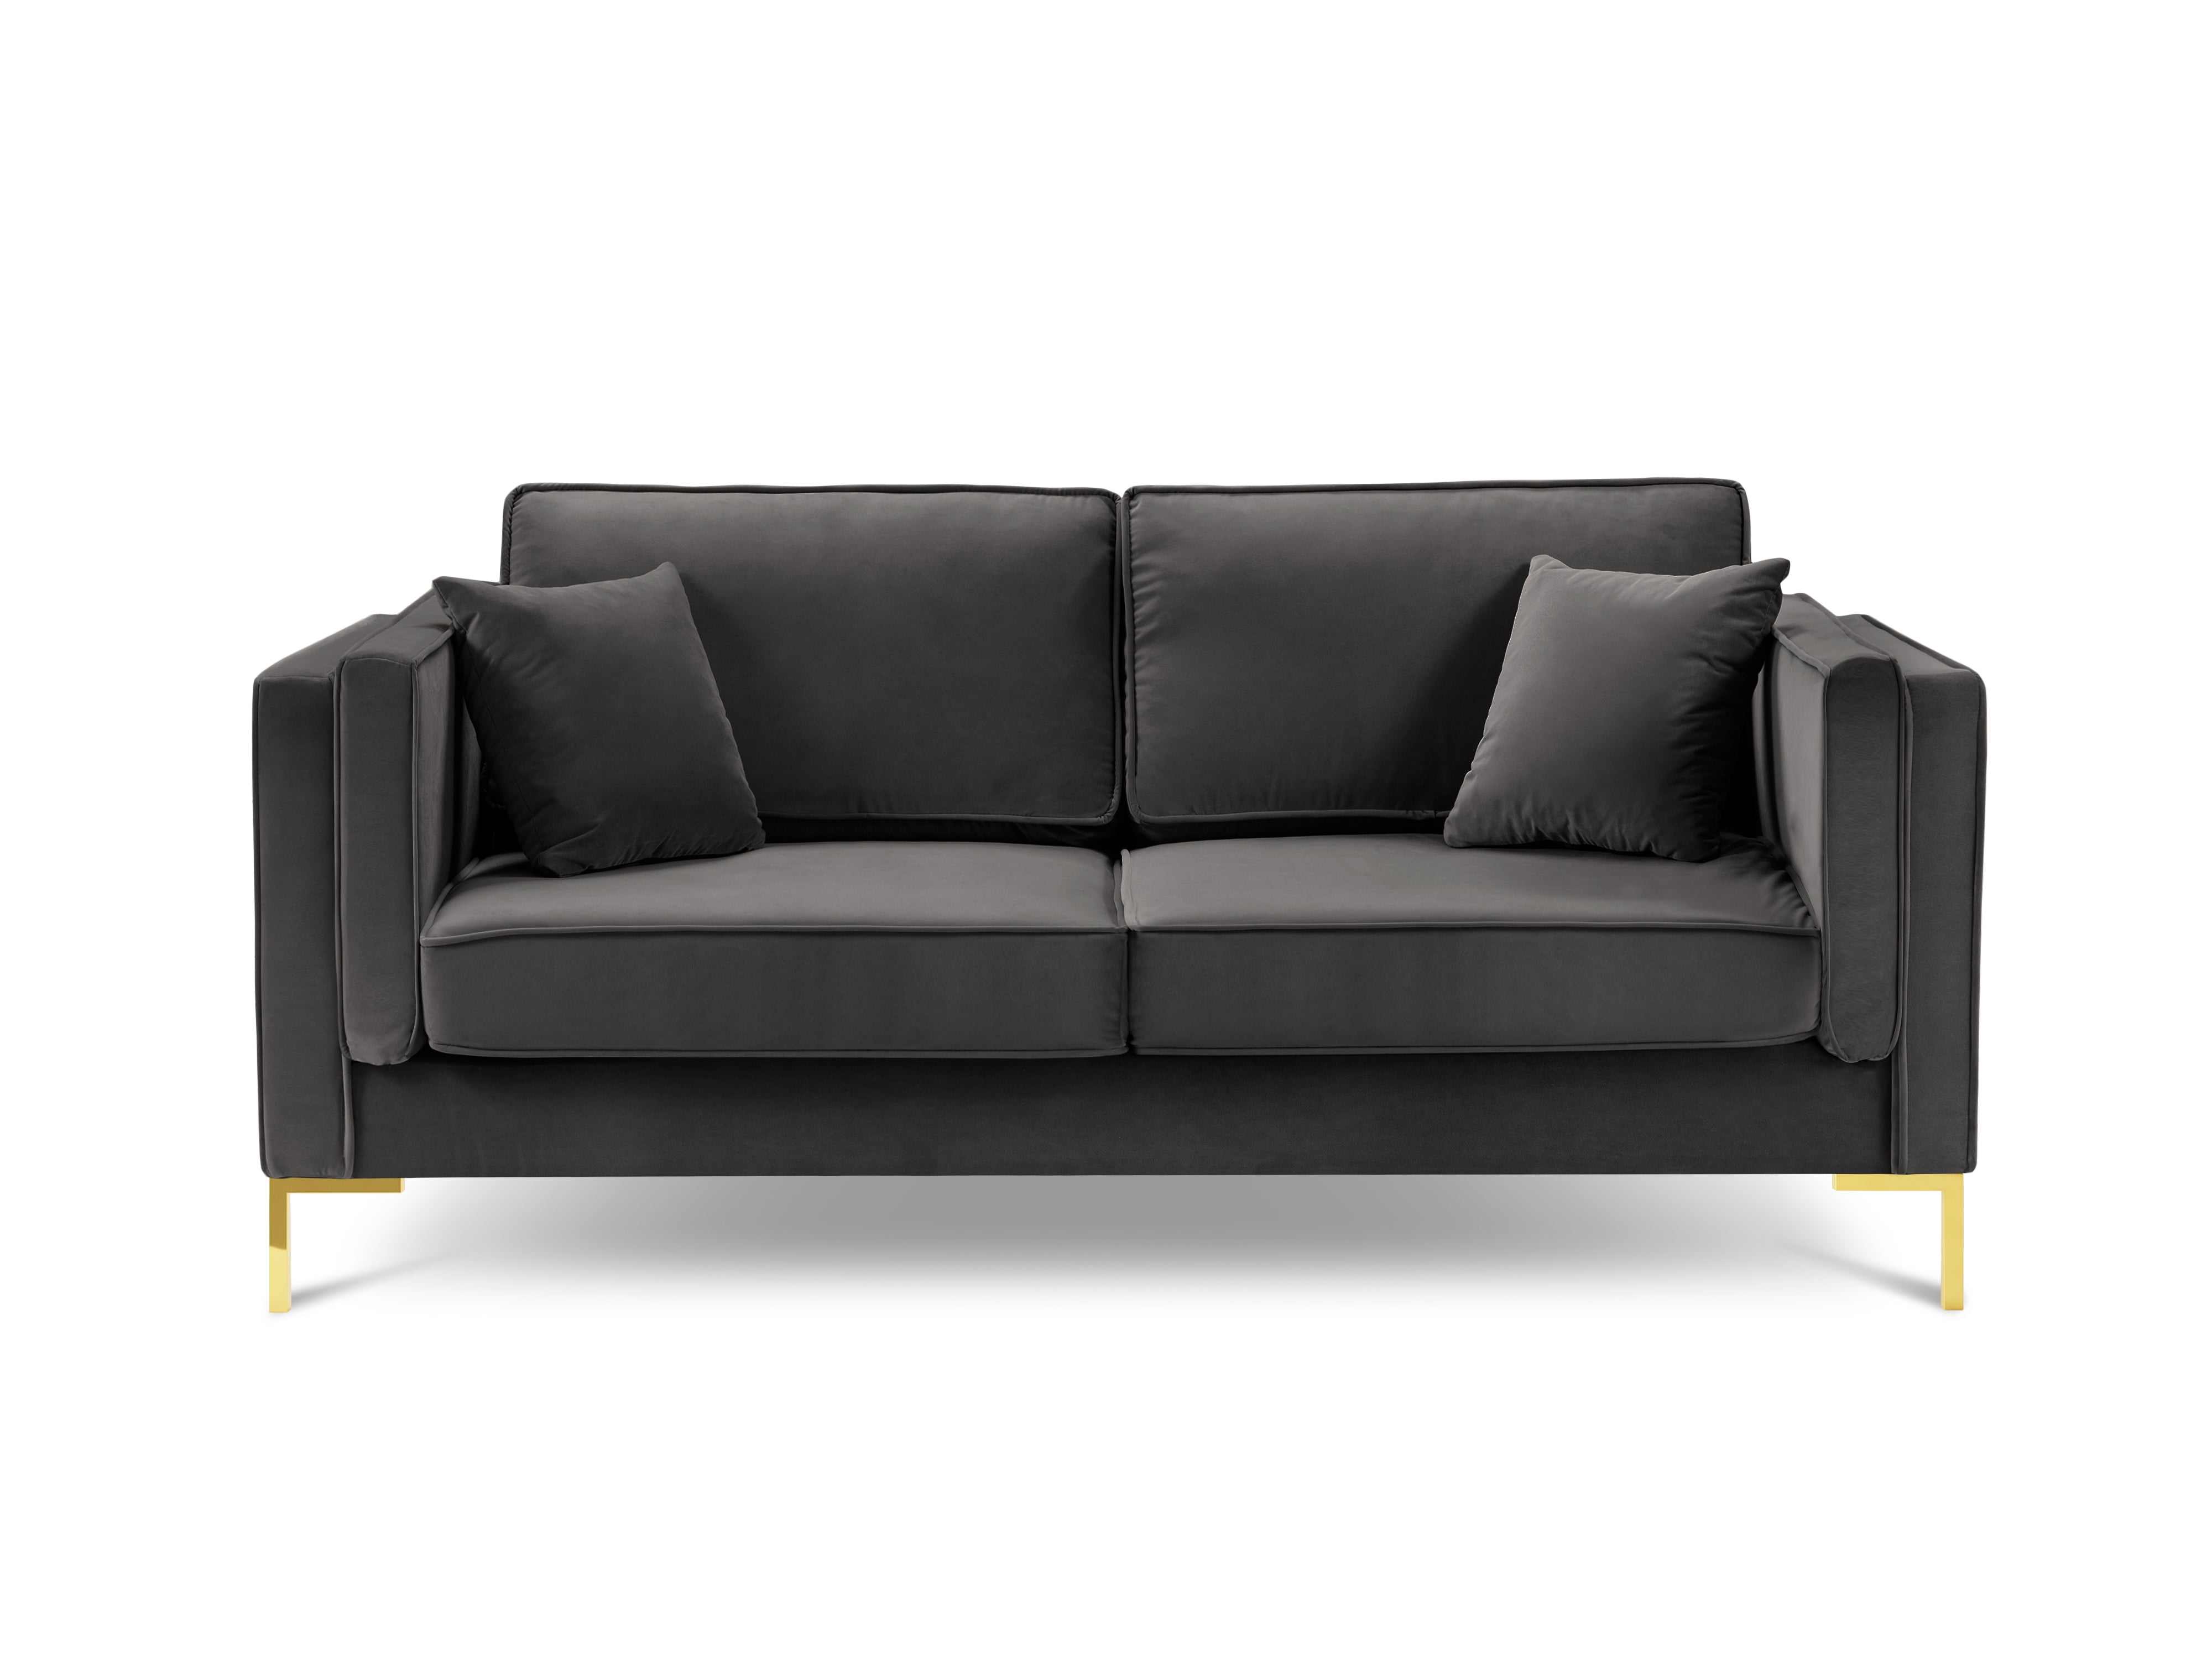 LUIS dark grey velvet 2-seater sofa with gold base